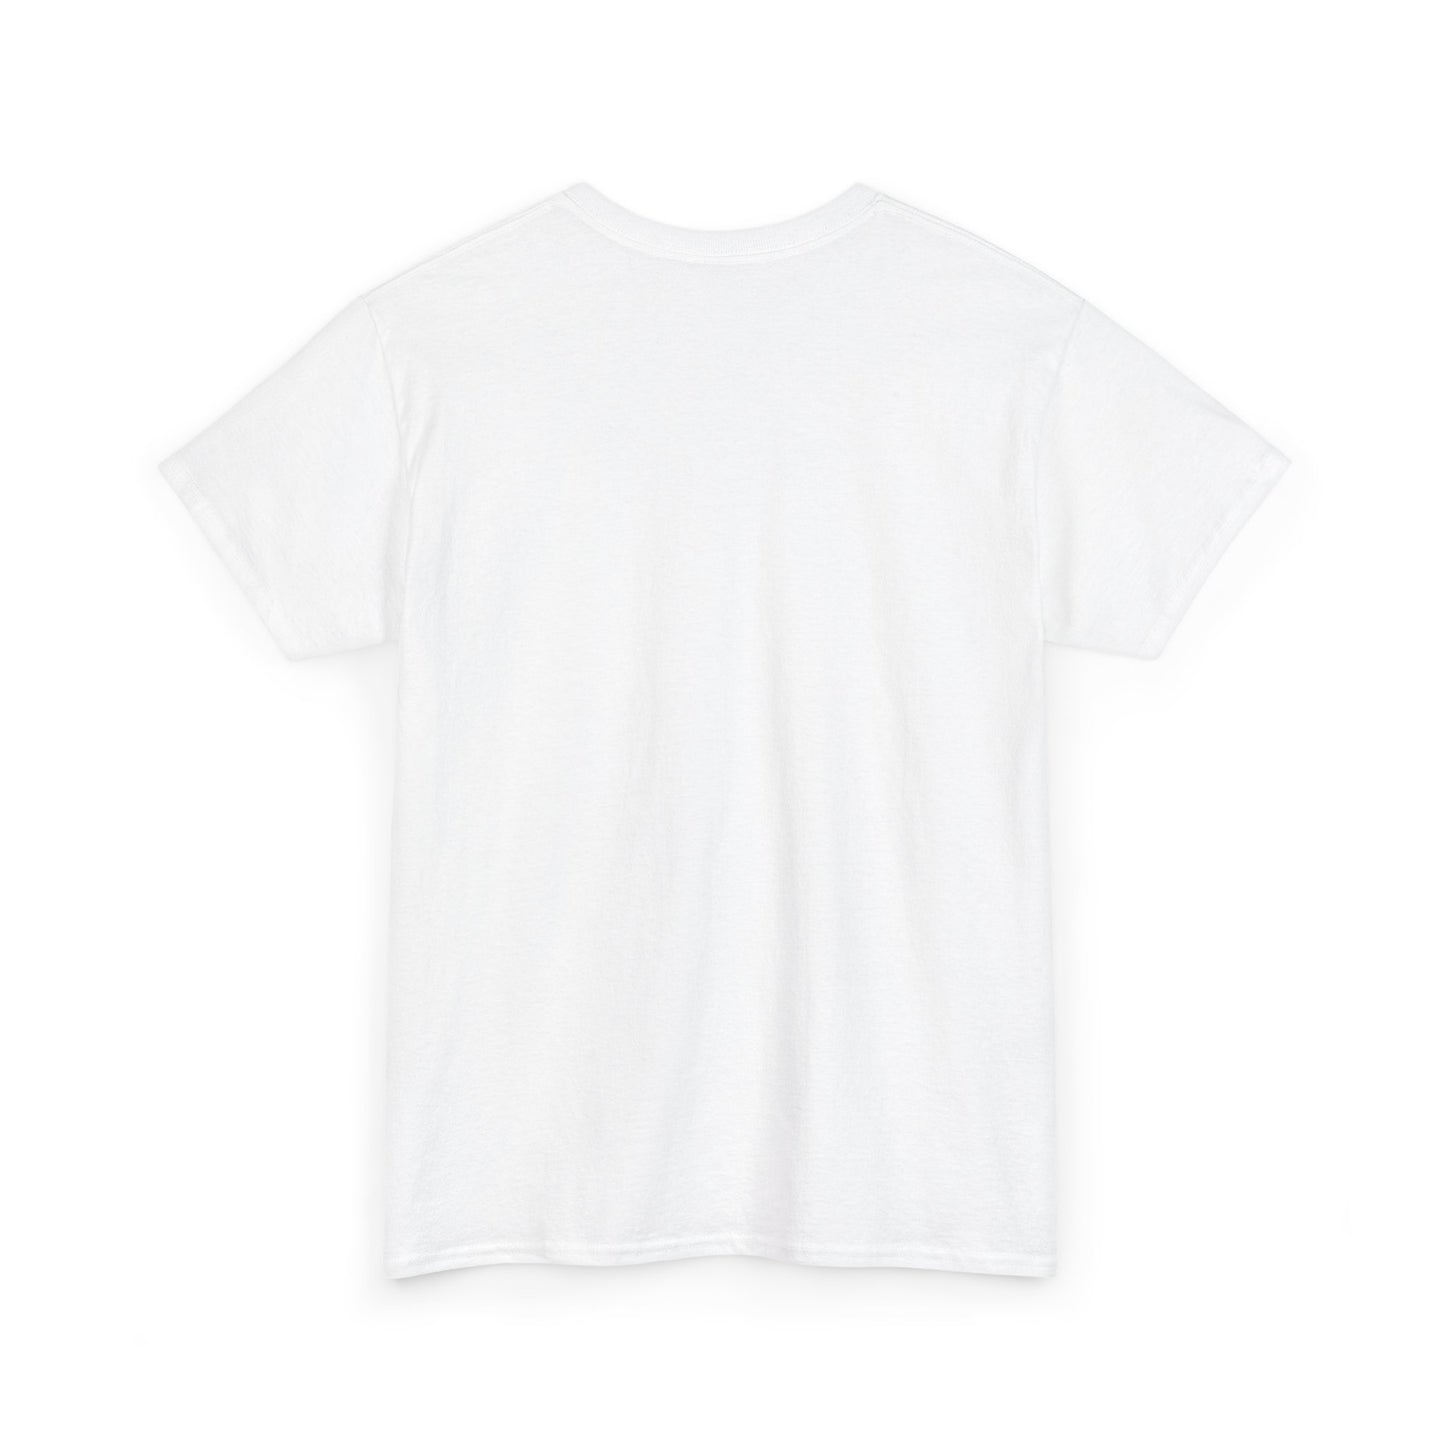 Trevor Lloyd-Jones For Aldershot! Reform Party Cotton T-Shirt